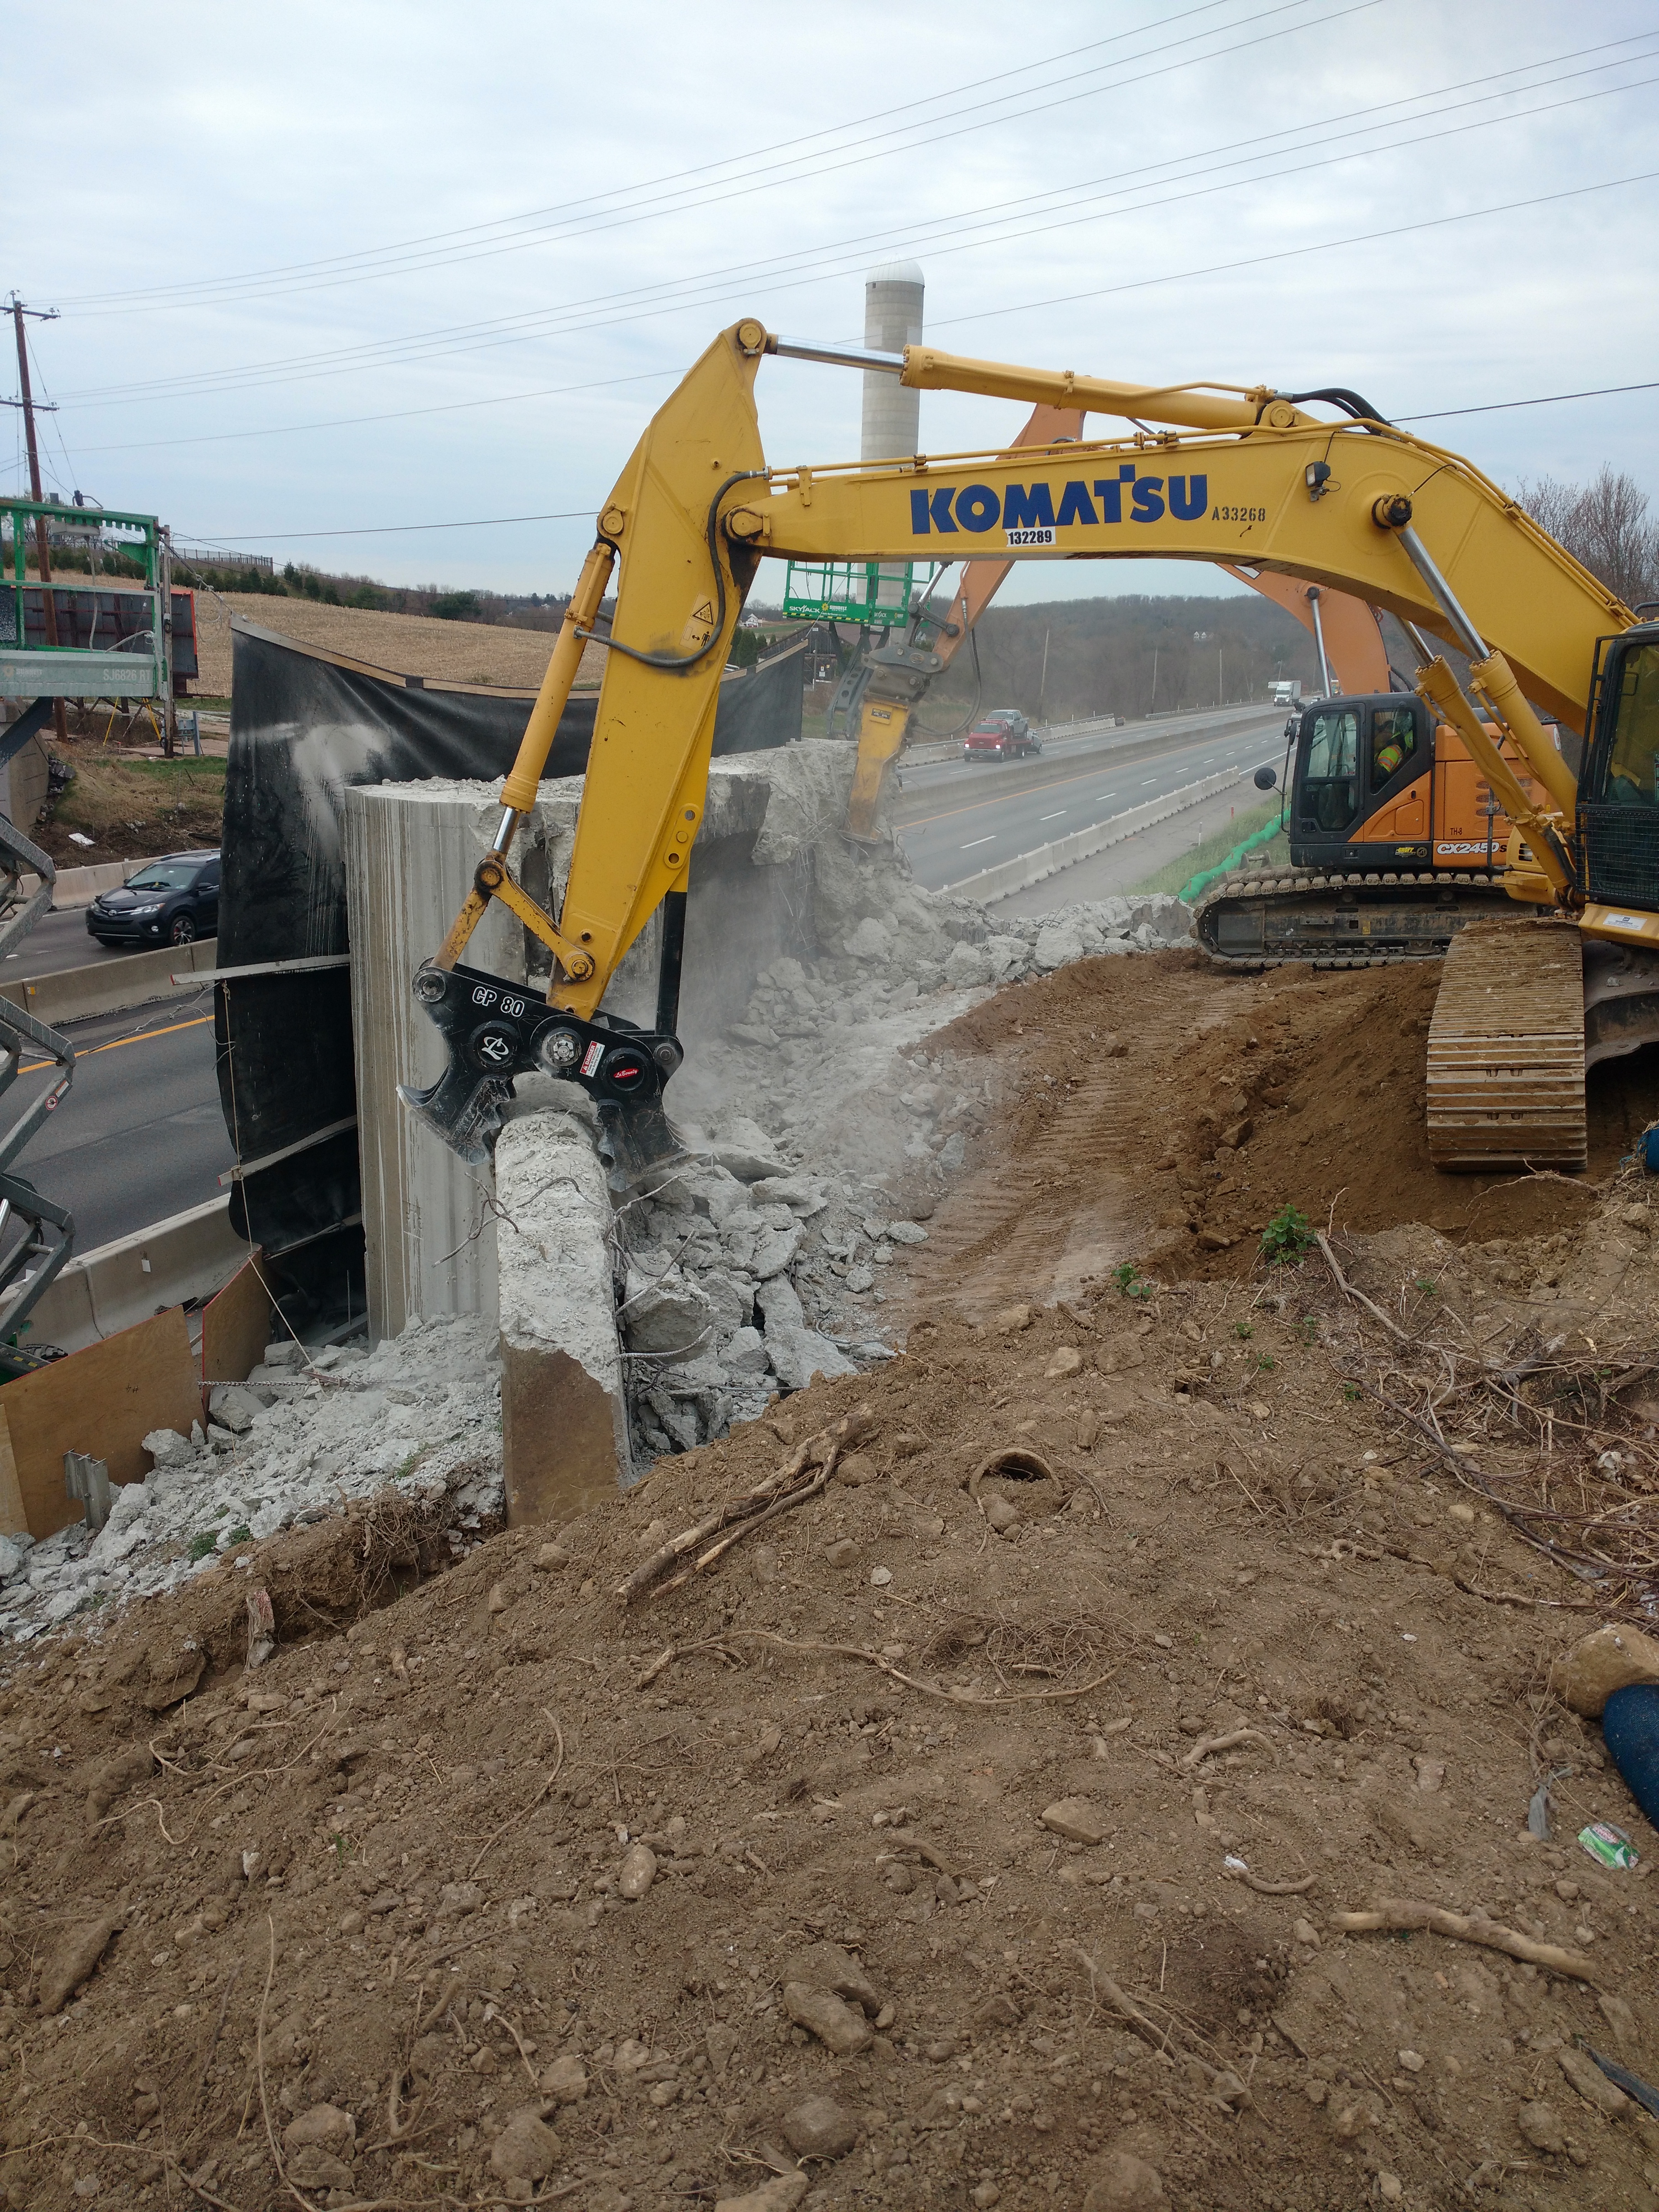 Bridge Construction excavator performing demolition